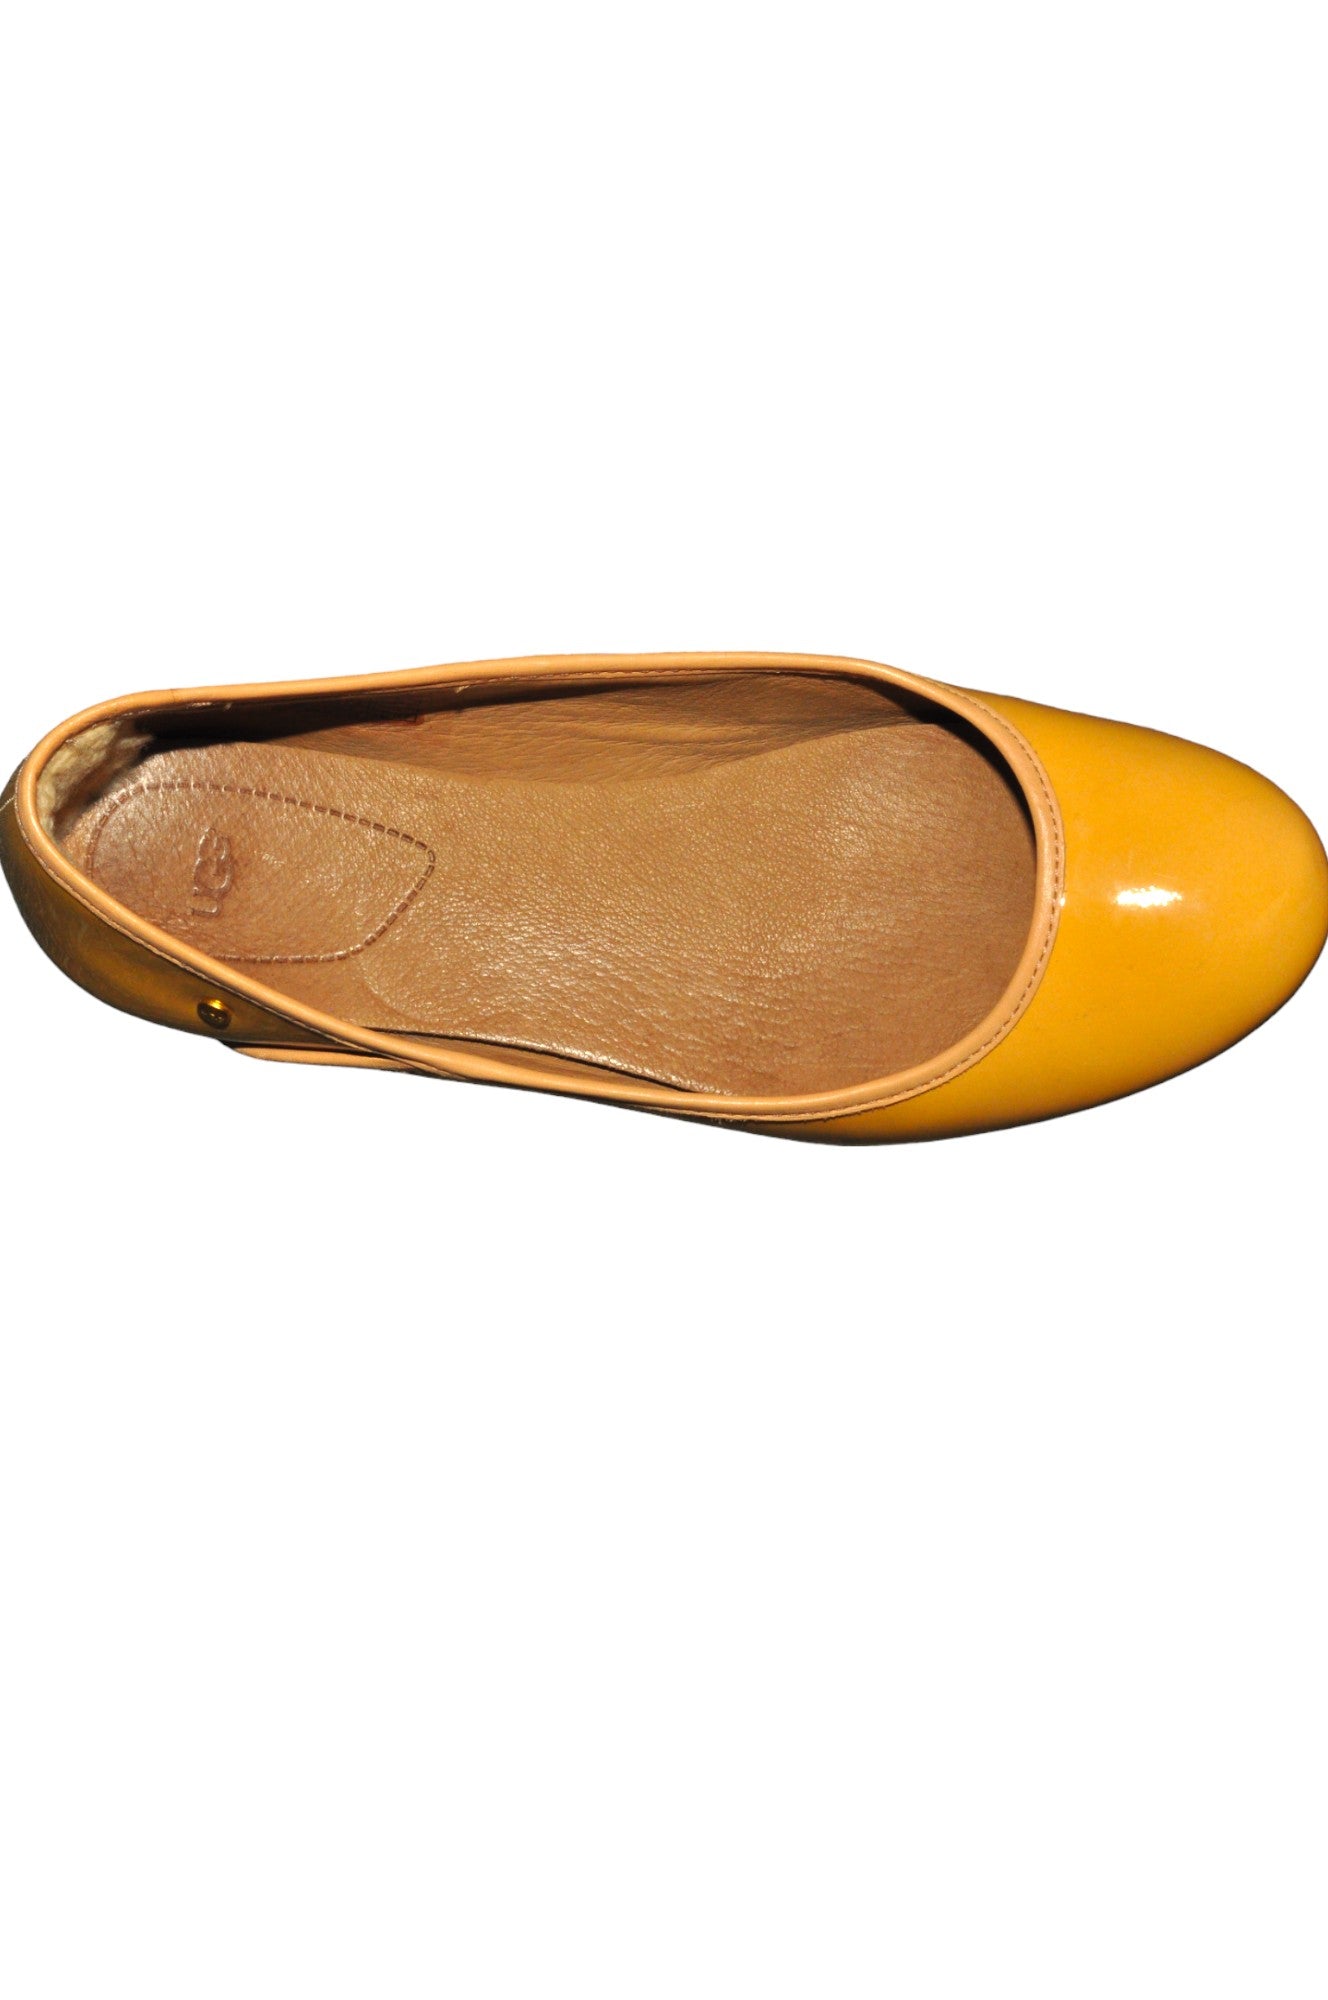 UGG Women Flat Shoes Regular fit in Yellow - Size 8 | 17.6 $ KOOP